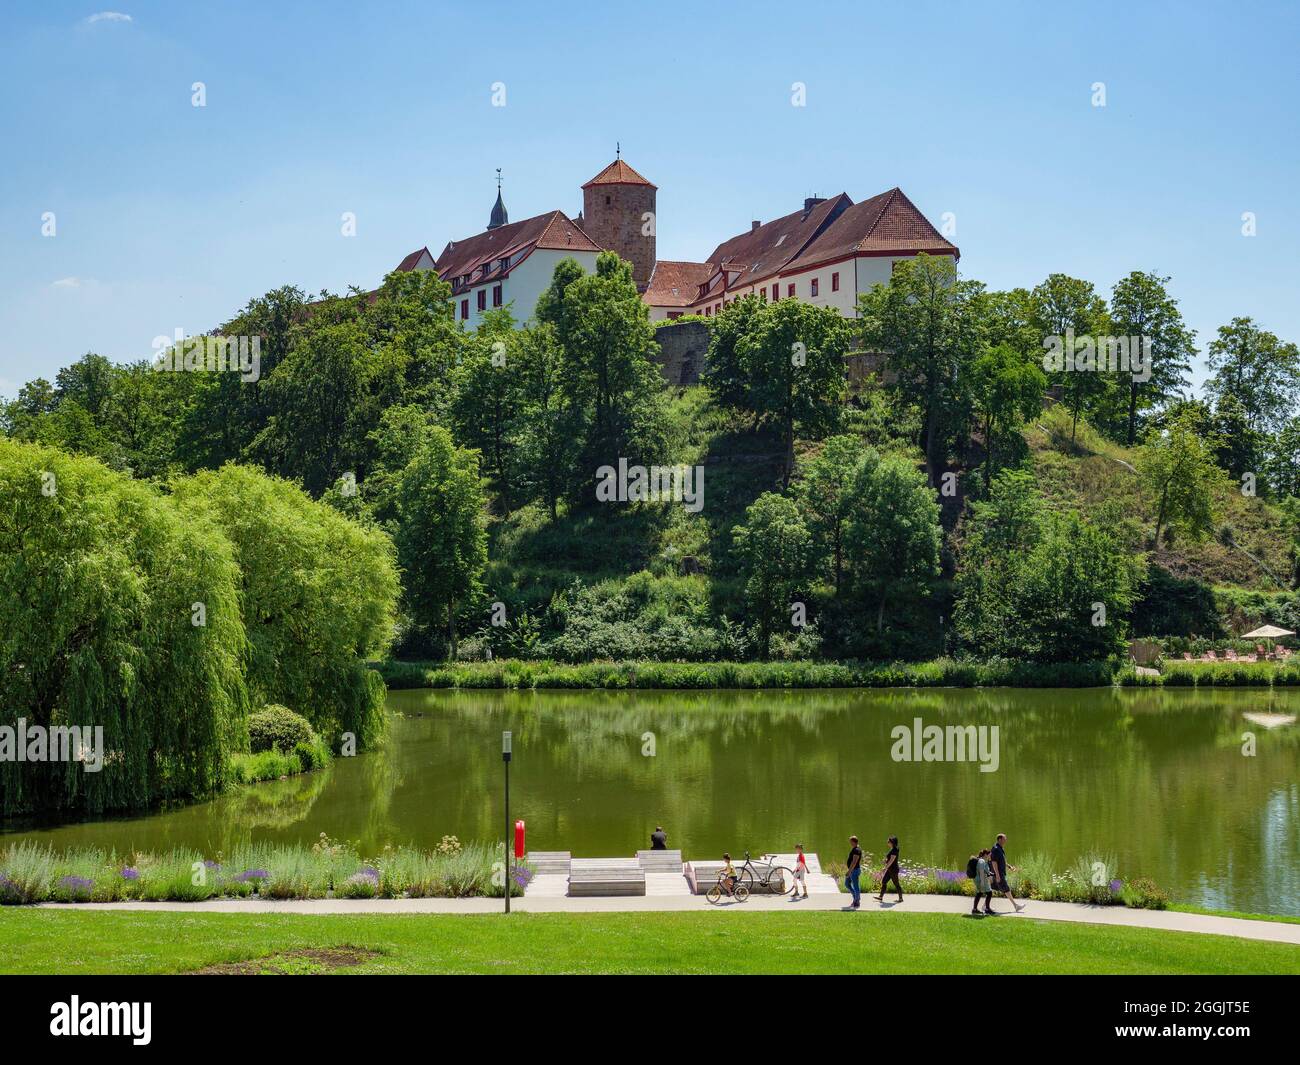 Castello di Iburg, Bad Iburg, Foresta di Teutoburg, Osnabruecker Land, bassa Sassonia, Germania Foto Stock